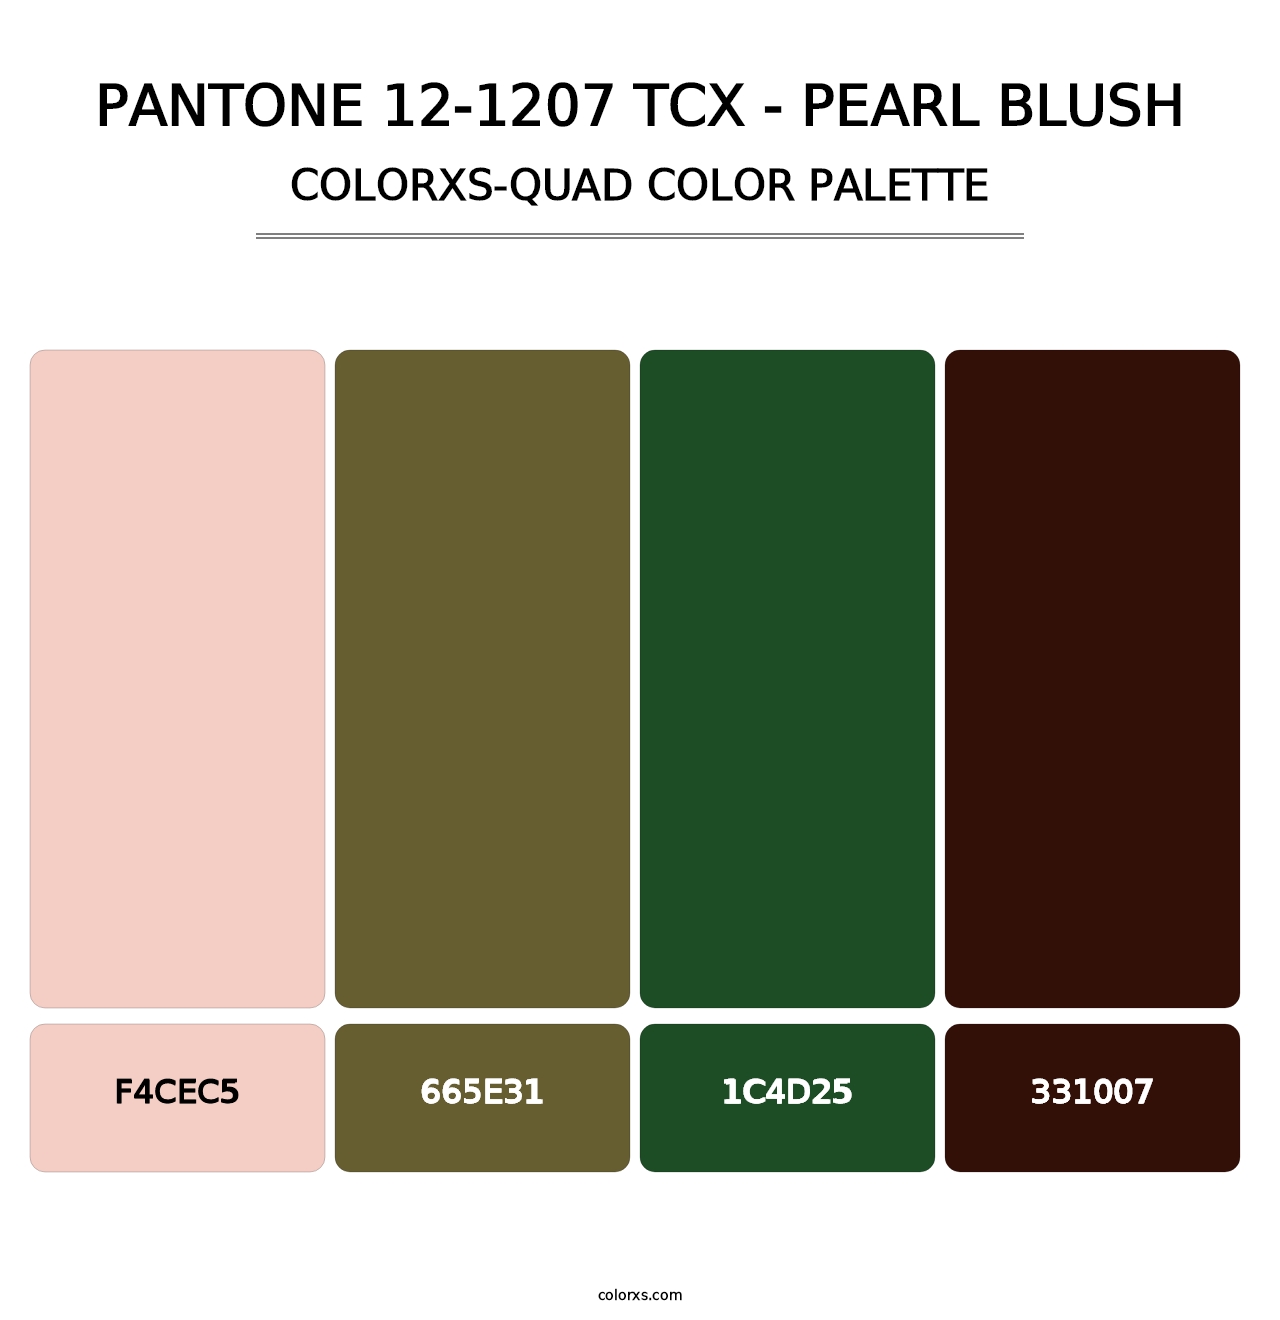 PANTONE 12-1207 TCX - Pearl Blush - Colorxs Quad Palette